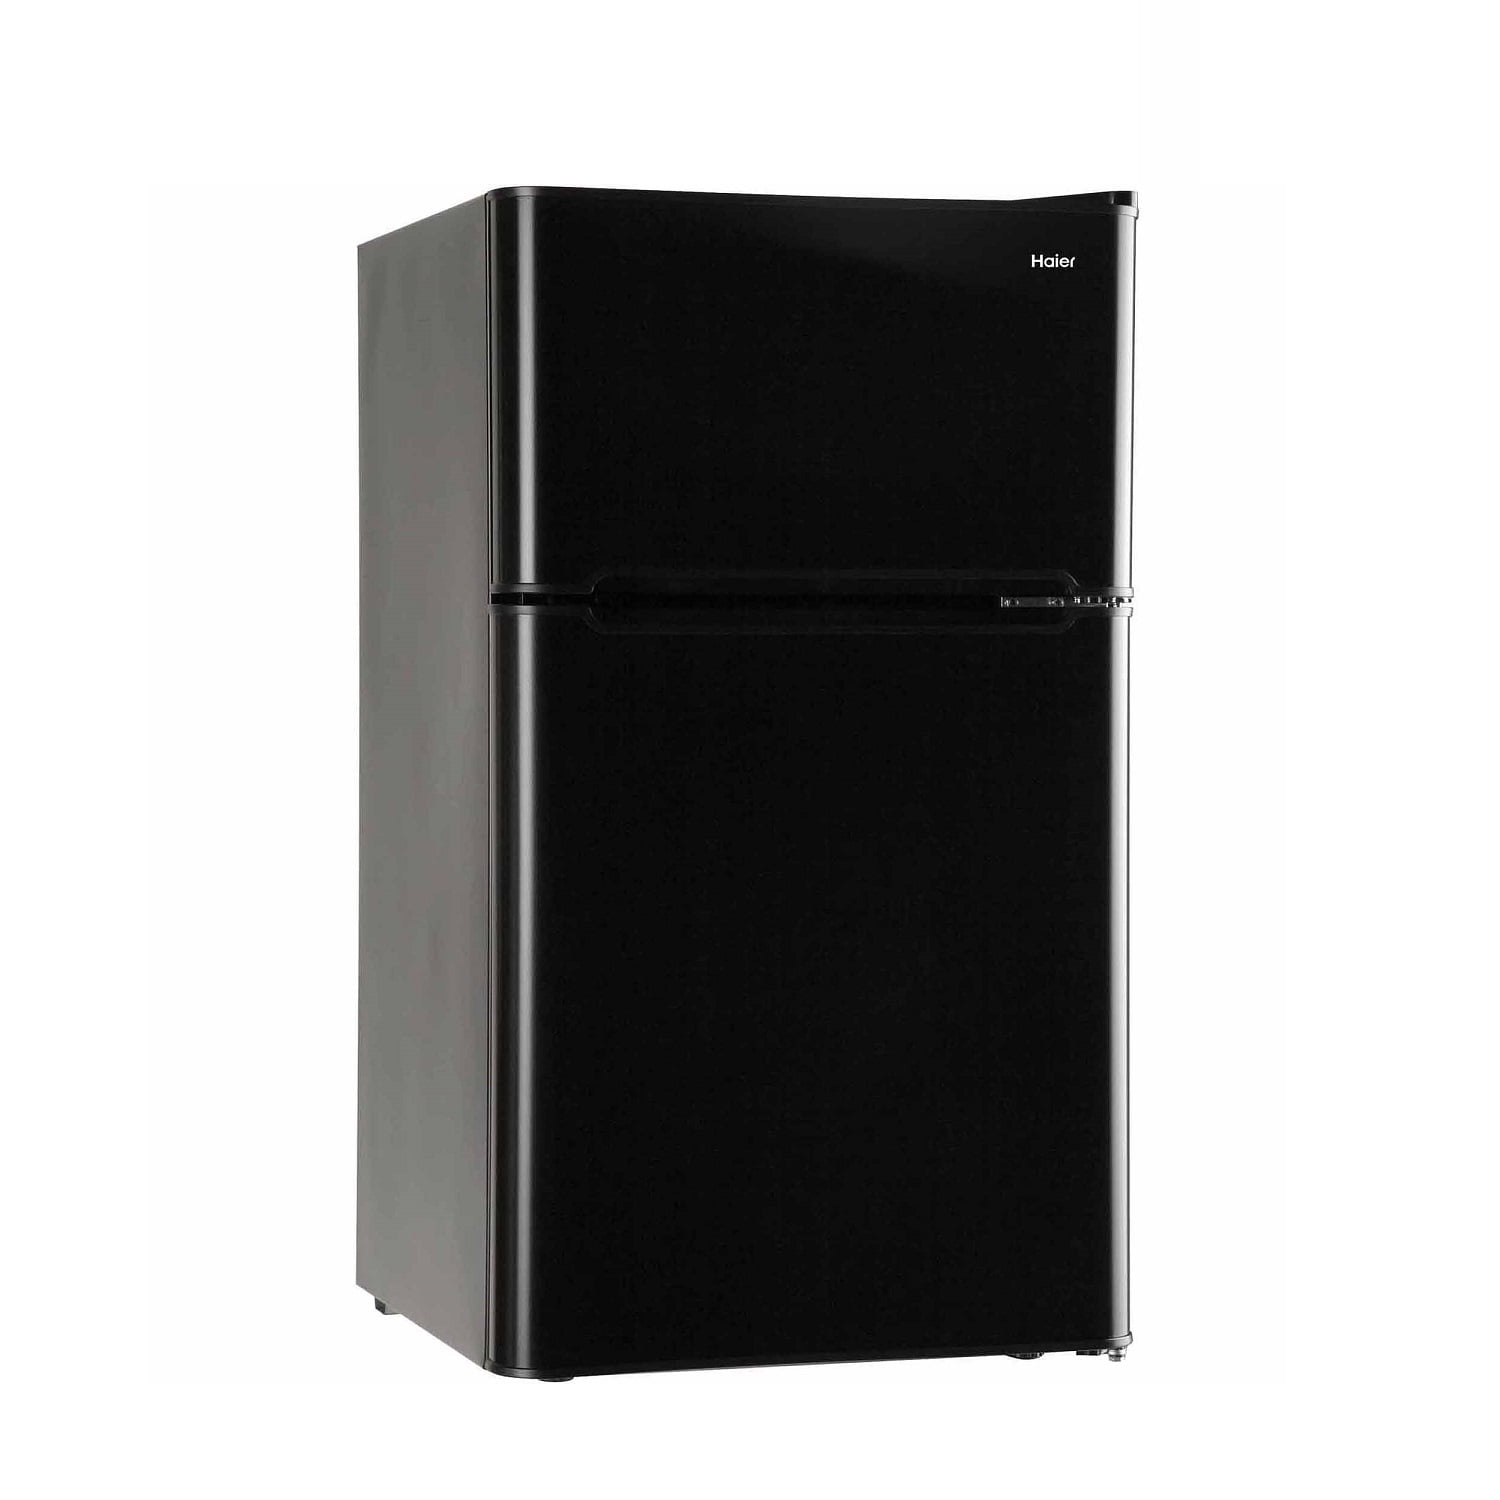 Haier 3.2 Refrigerator-blk Cab/vcm Door 